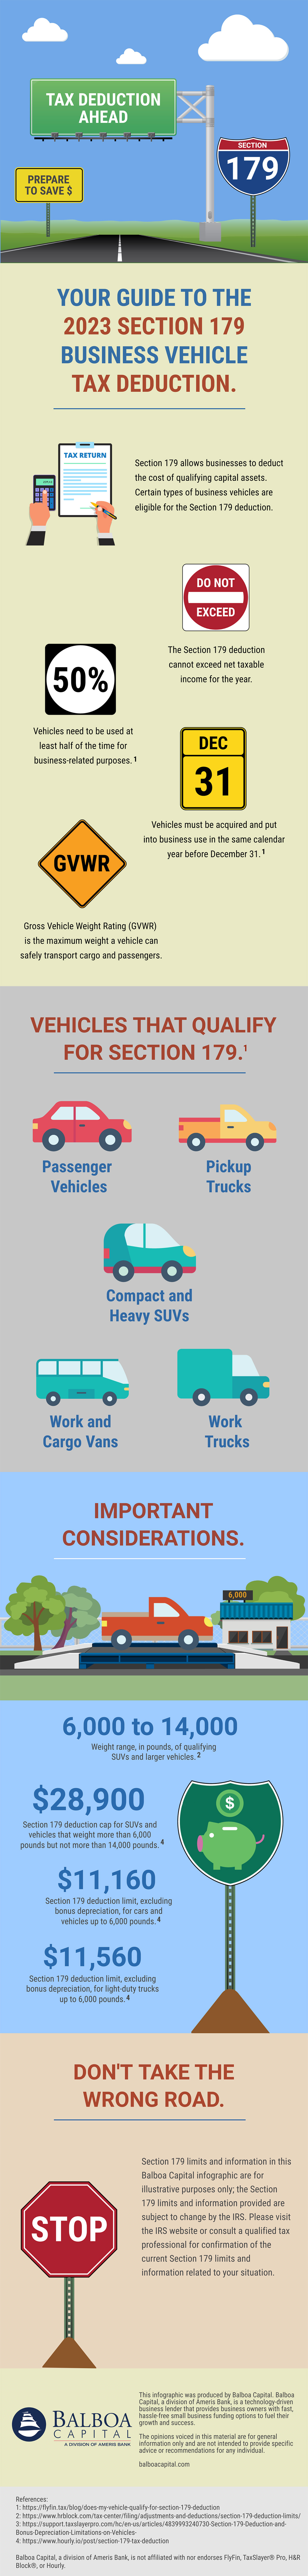 Section 179 Vehicles Infographic Balboa Capital